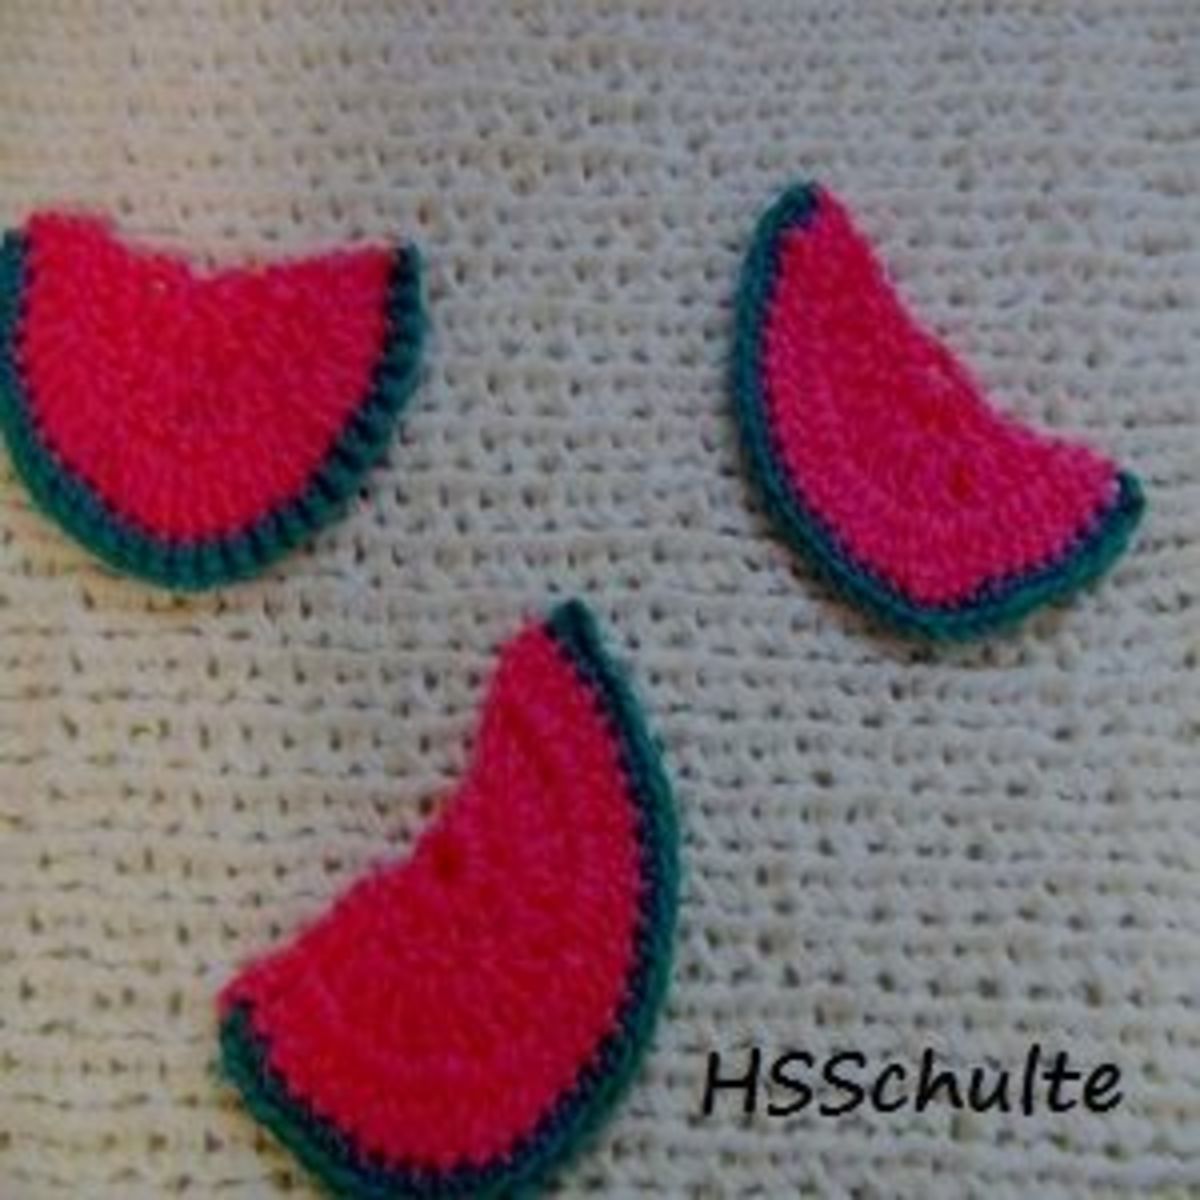 How to Crochet a Watermelon Slice Applique